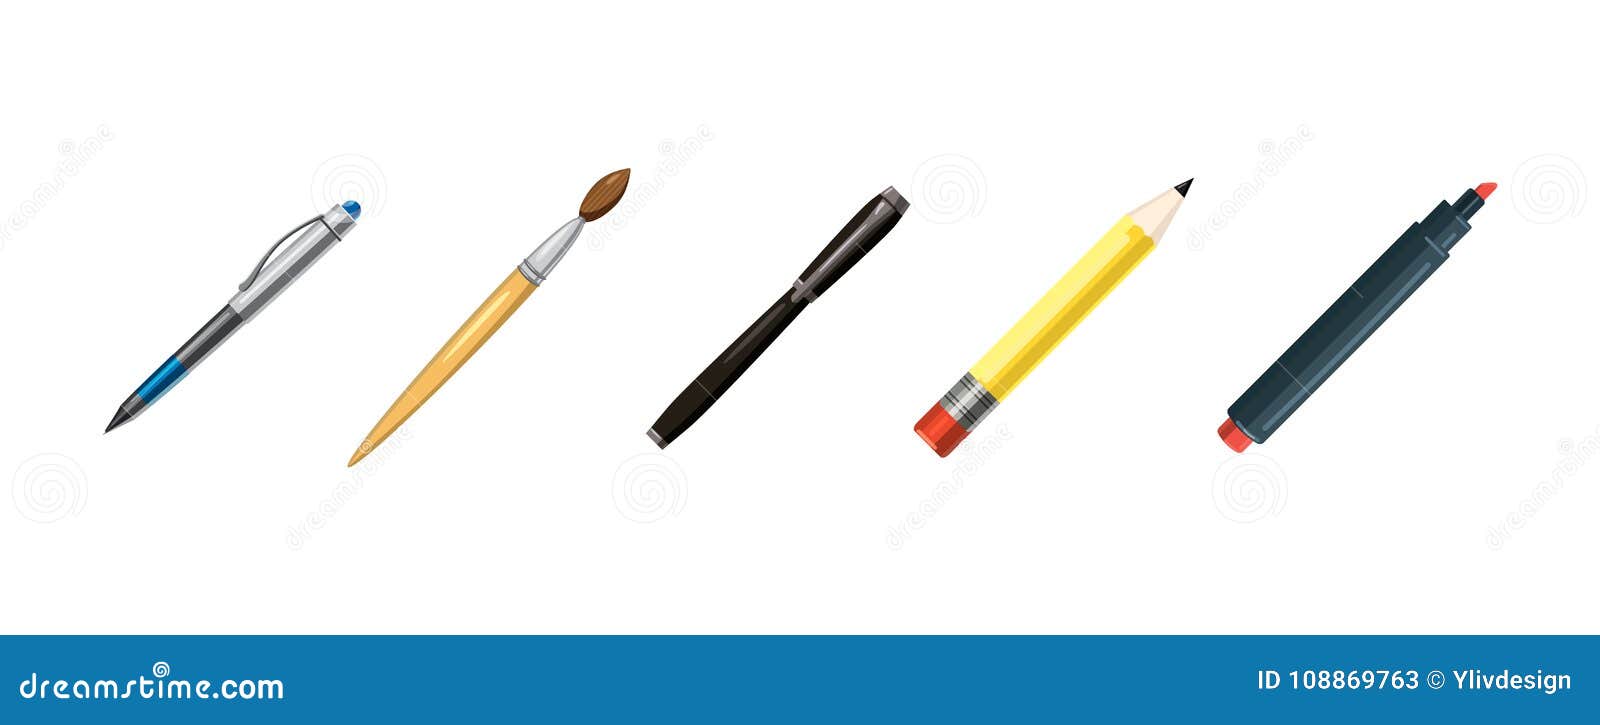 Cartoon pens and pencils writing pen drawing Vector Image